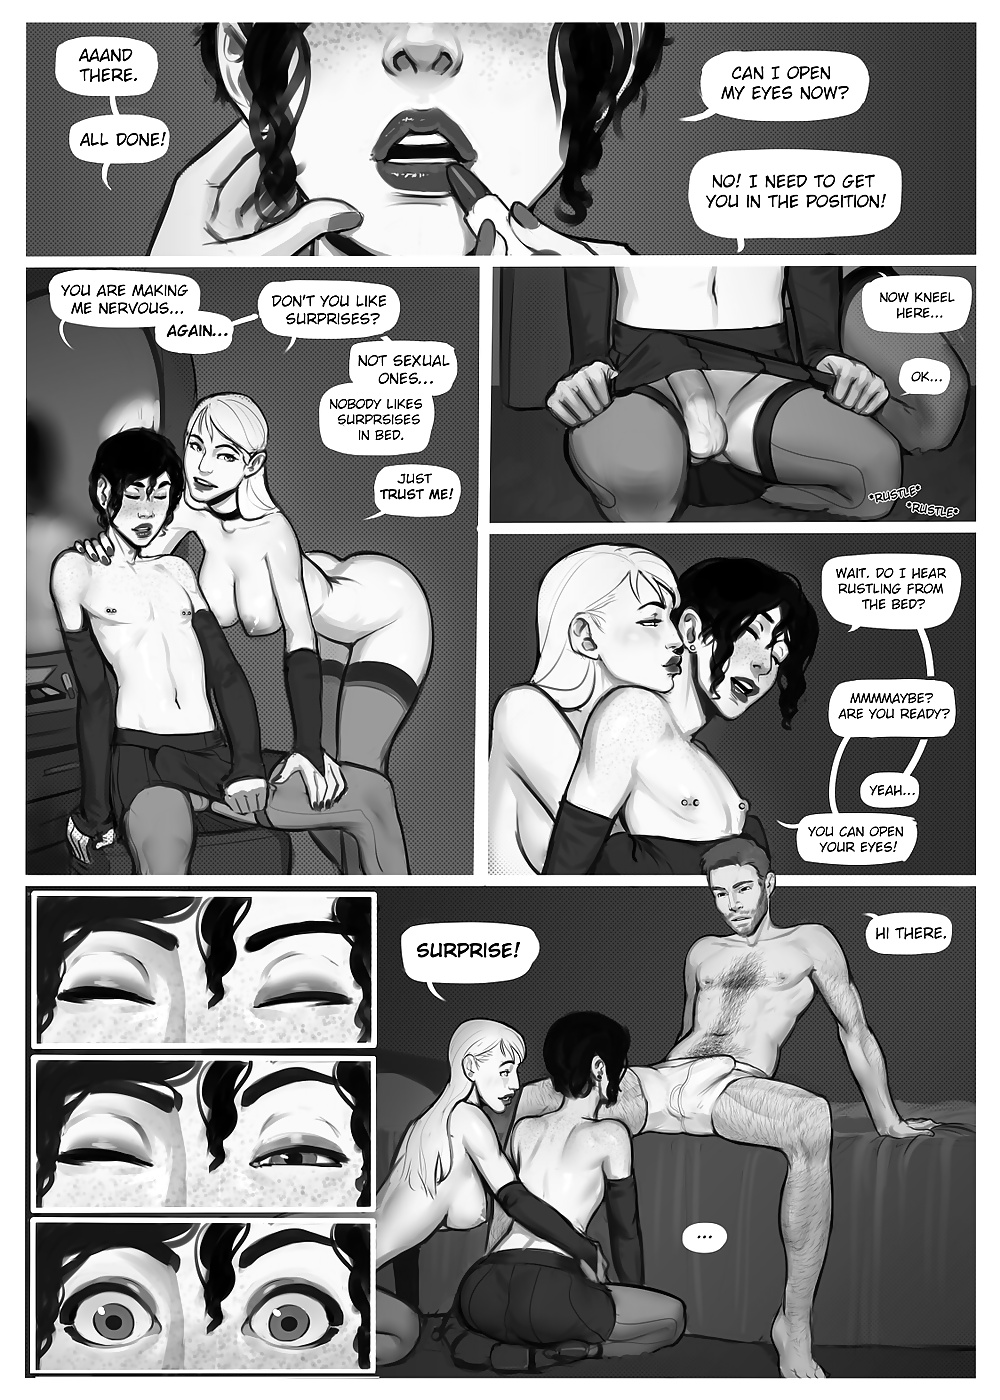 Very sexy trap bi comic i found on the net. #26568036